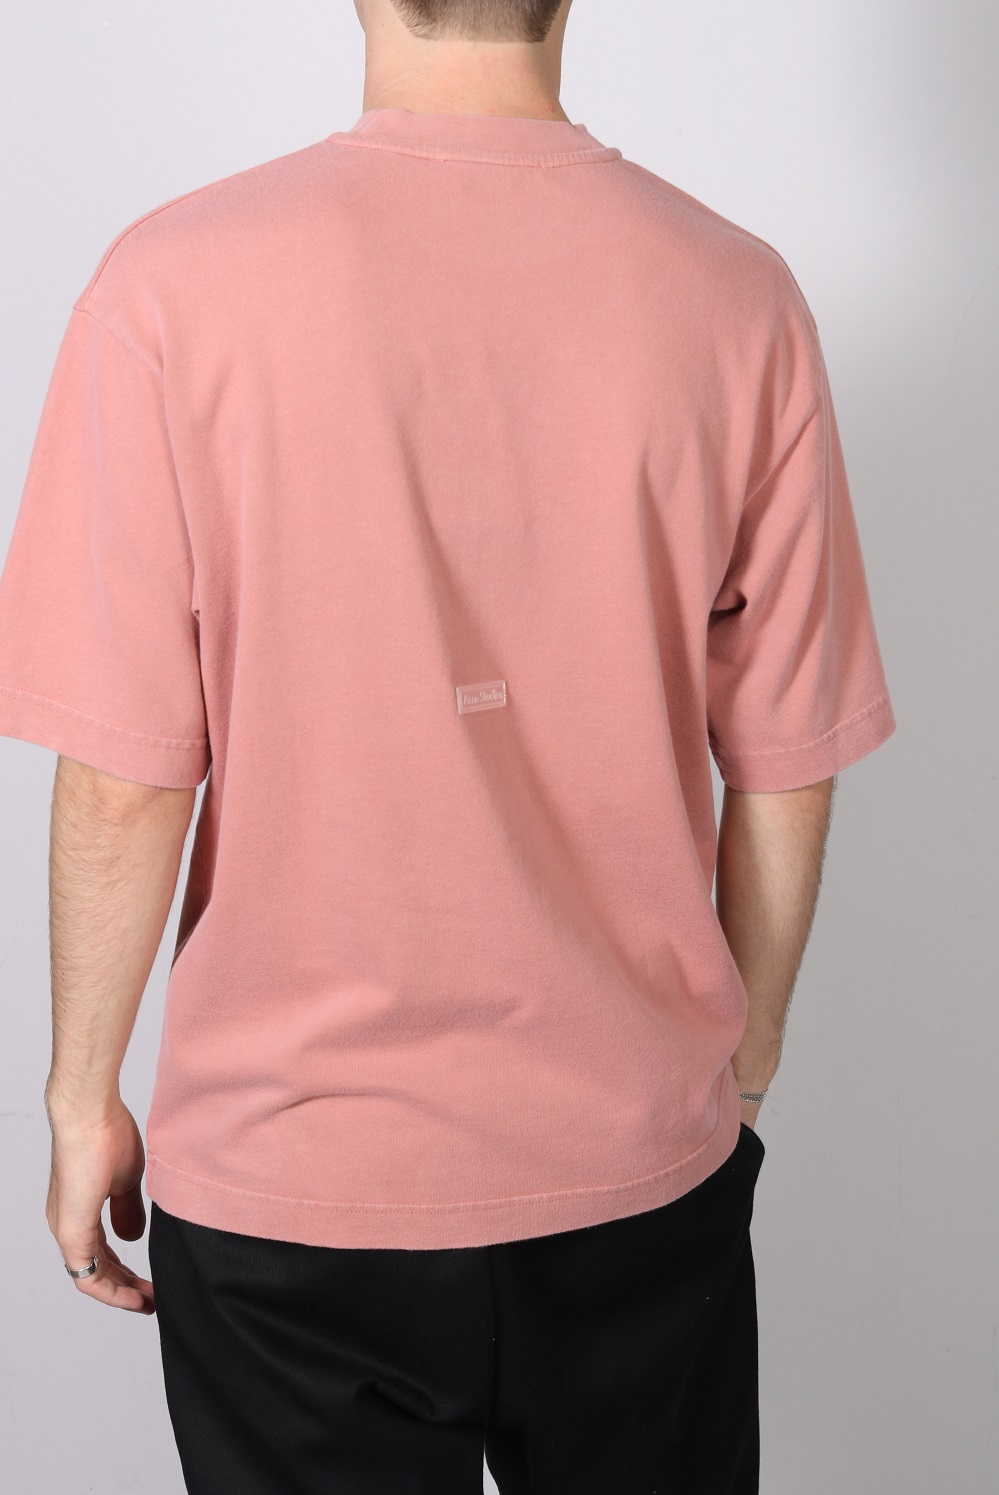 ACNE STUDIOS Vintage T-Shirt in Vintage Pink XXS